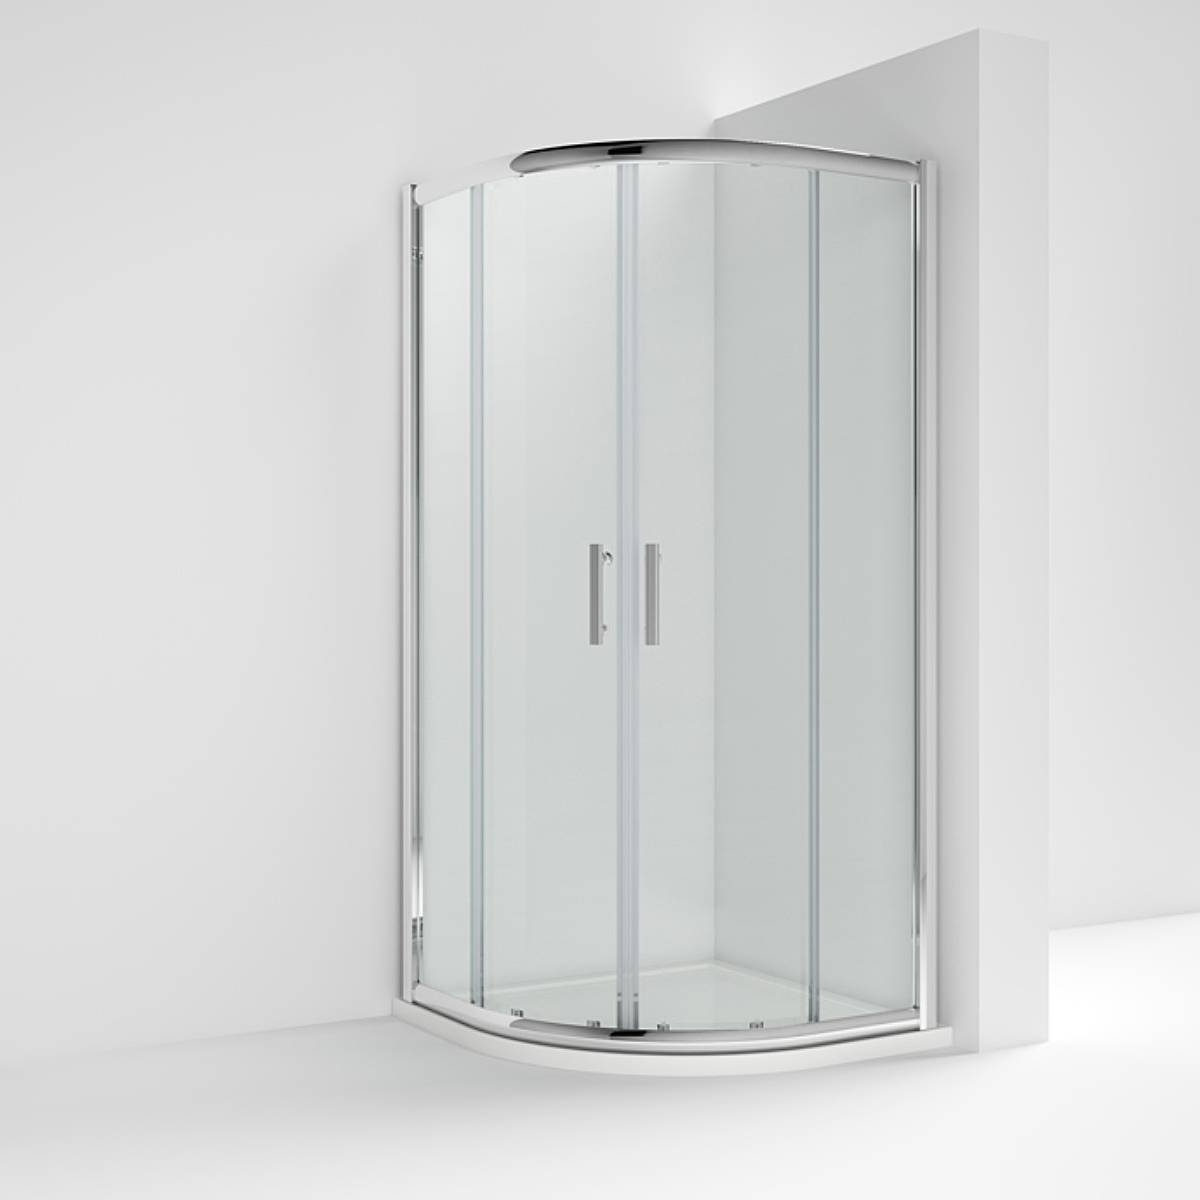 Nuie Pacific 800mm Quadrant Shower Enclosure - Chrome (12596)